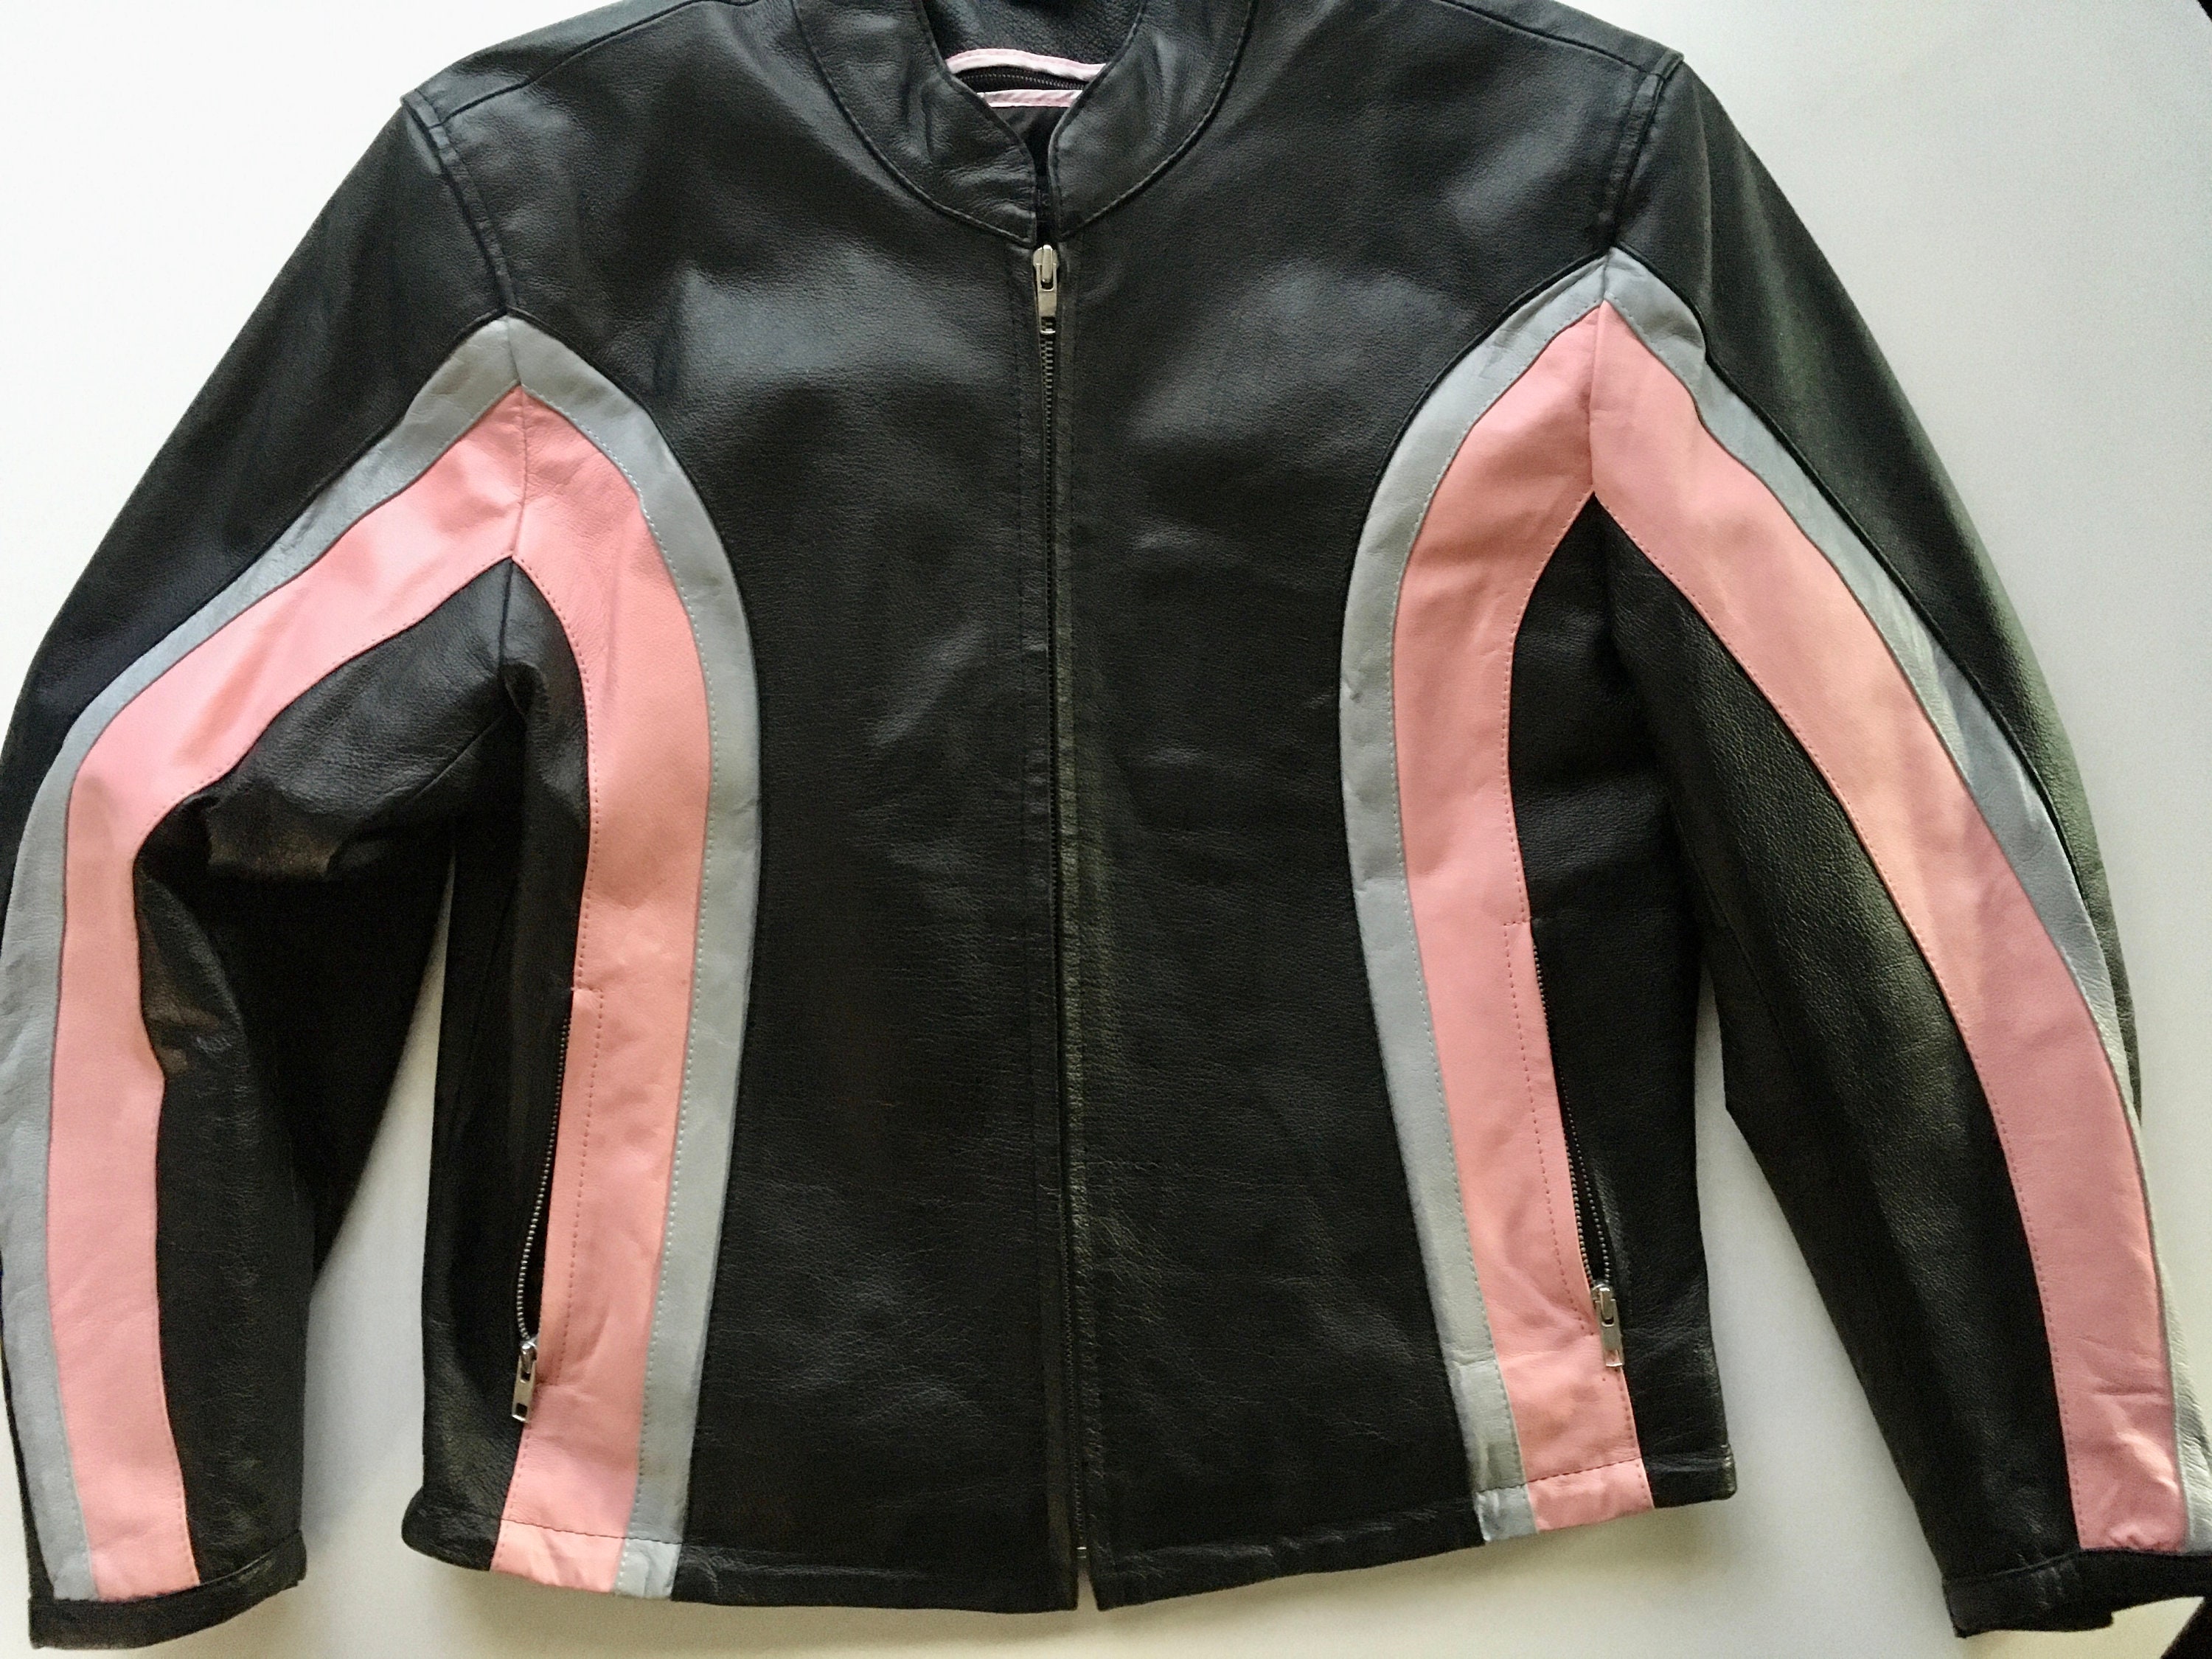 Biker Jacket Pink and Black Ornate Printed Leather Medium 